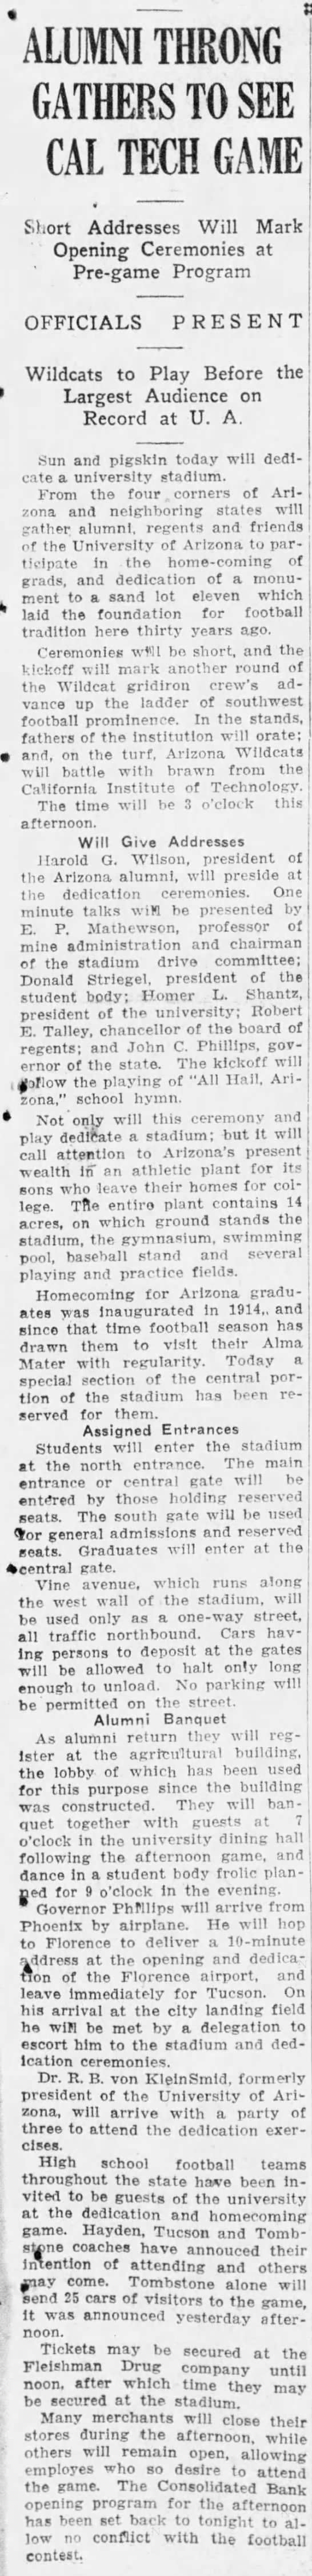 Arizona Stadium Dedicated - 